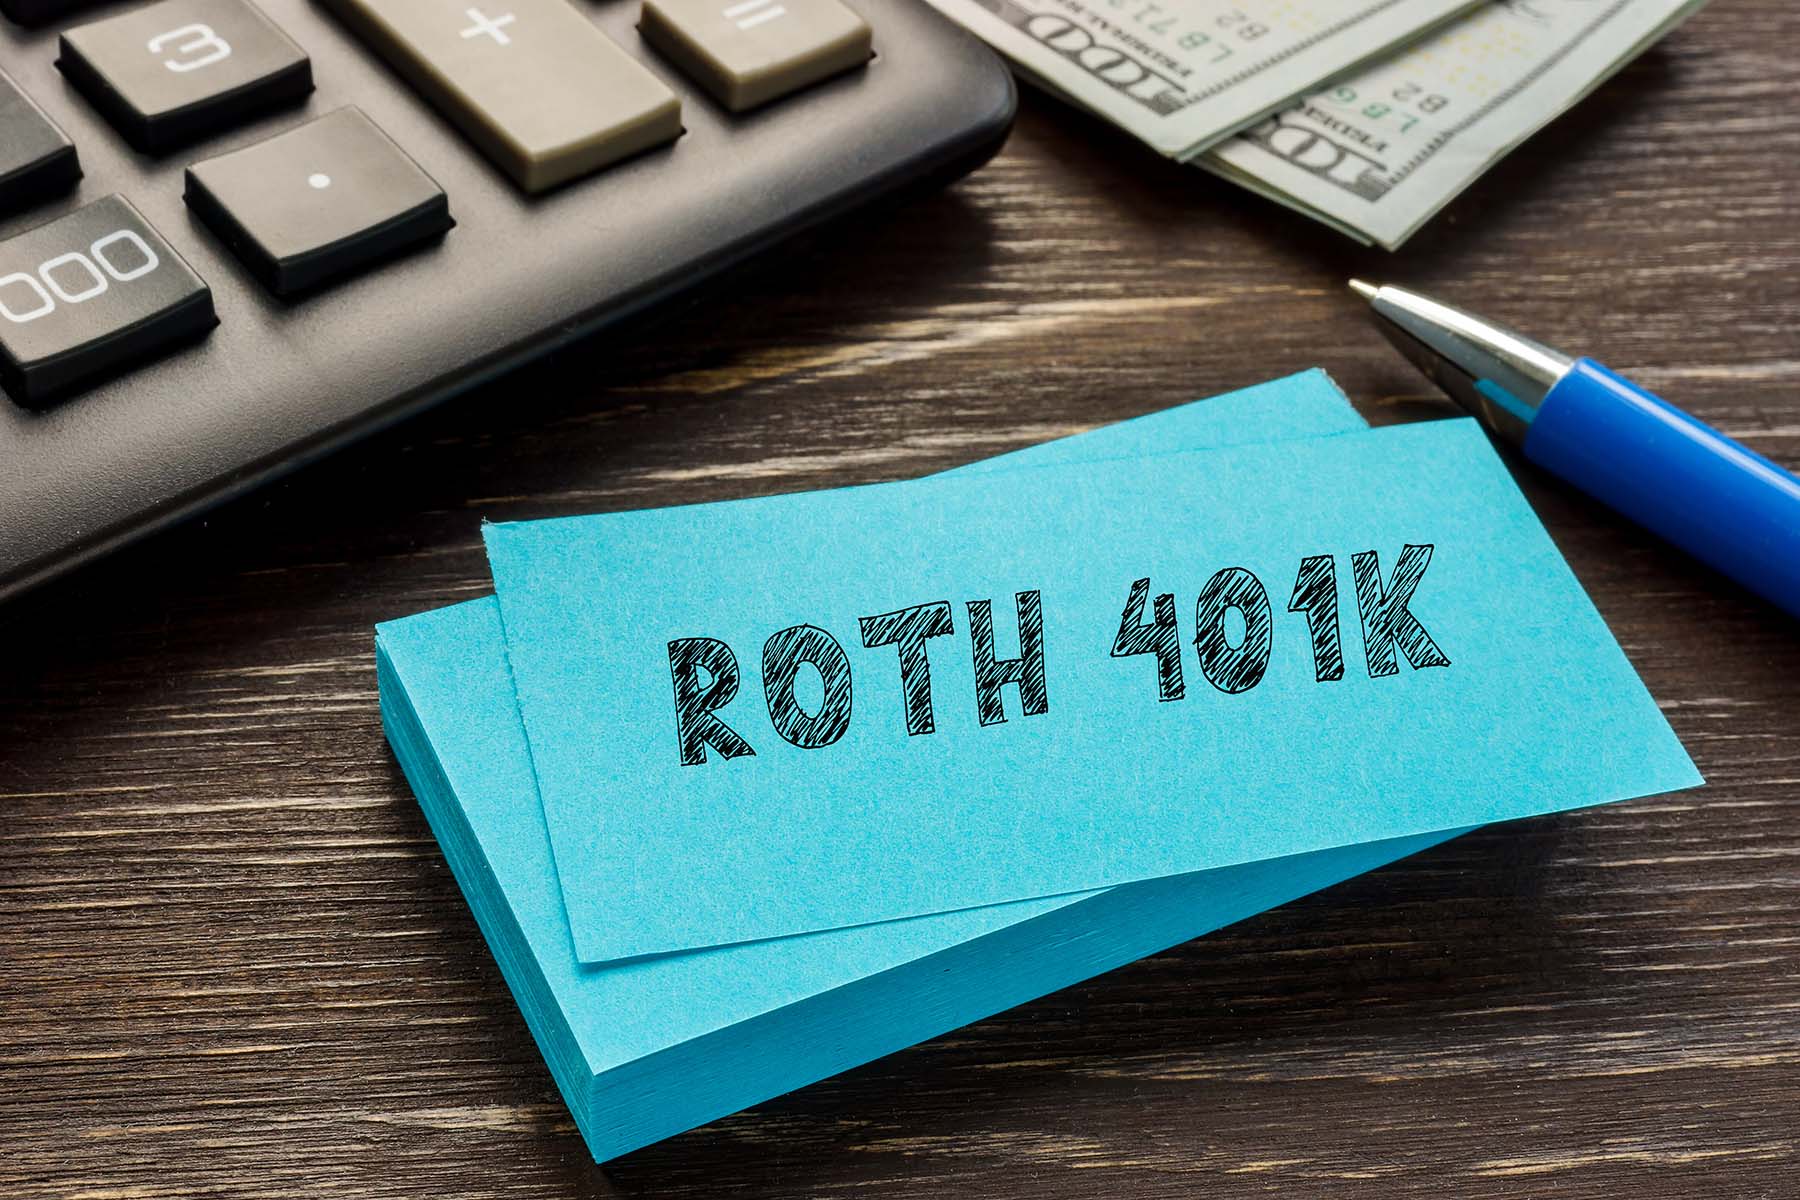 Roth 401k